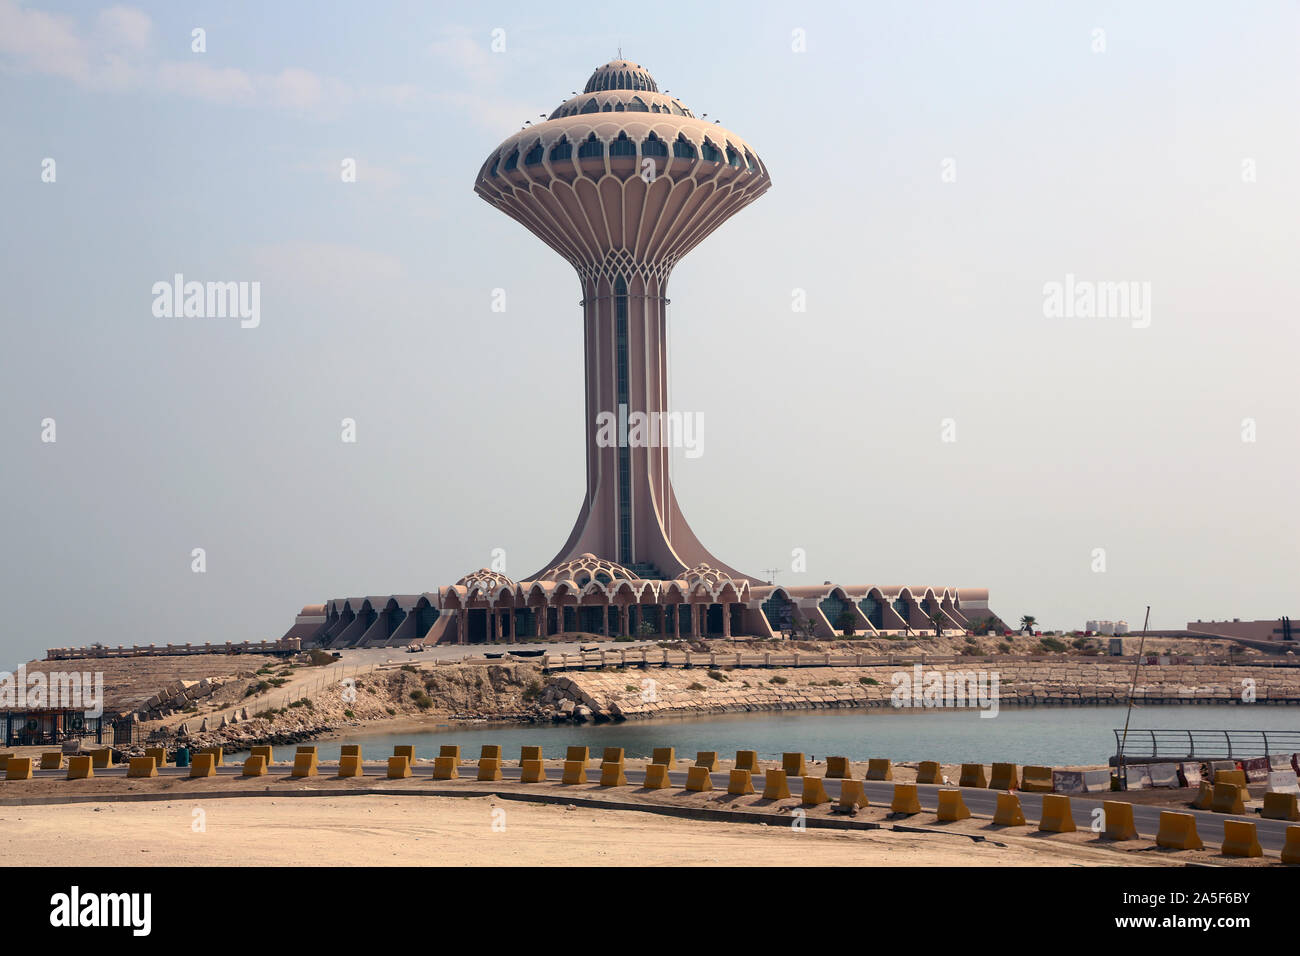 Saudi Arabia, Al Khobar, Corniche Stock Photo